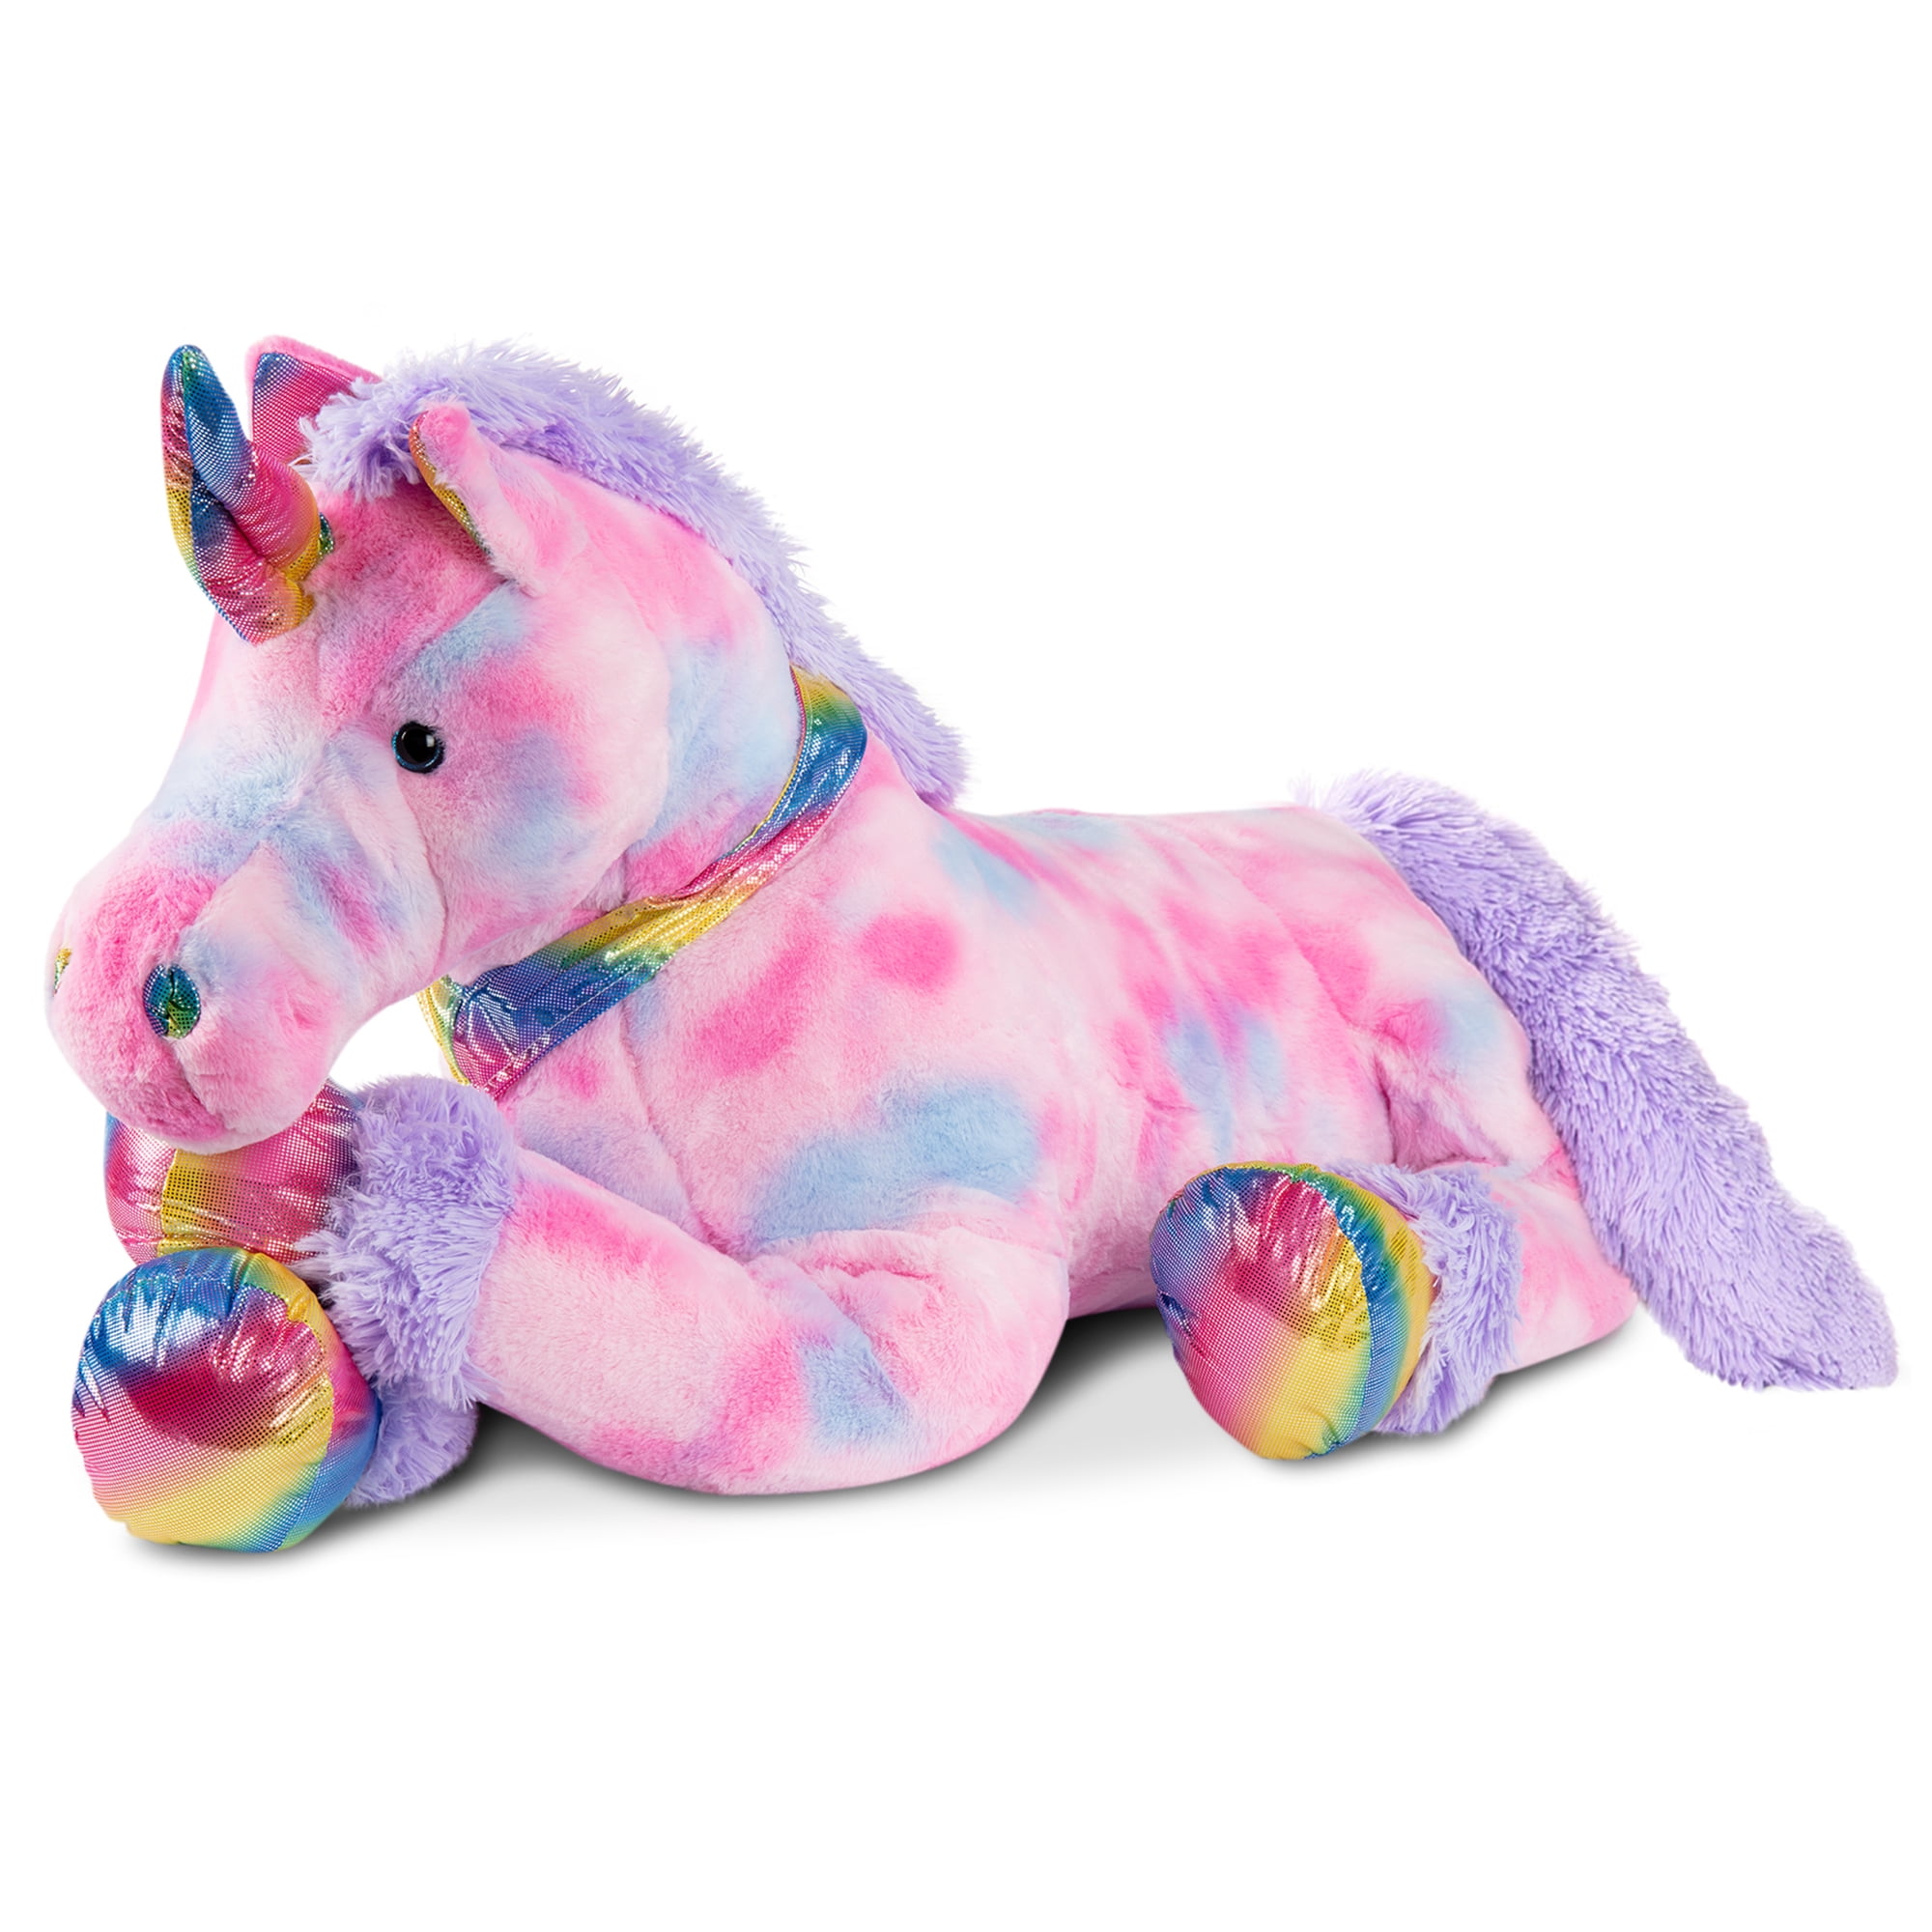 Stuffed Animal Unicorn Plush Toy Pink 18" Big Large Girl Kids Toddler Gift New 